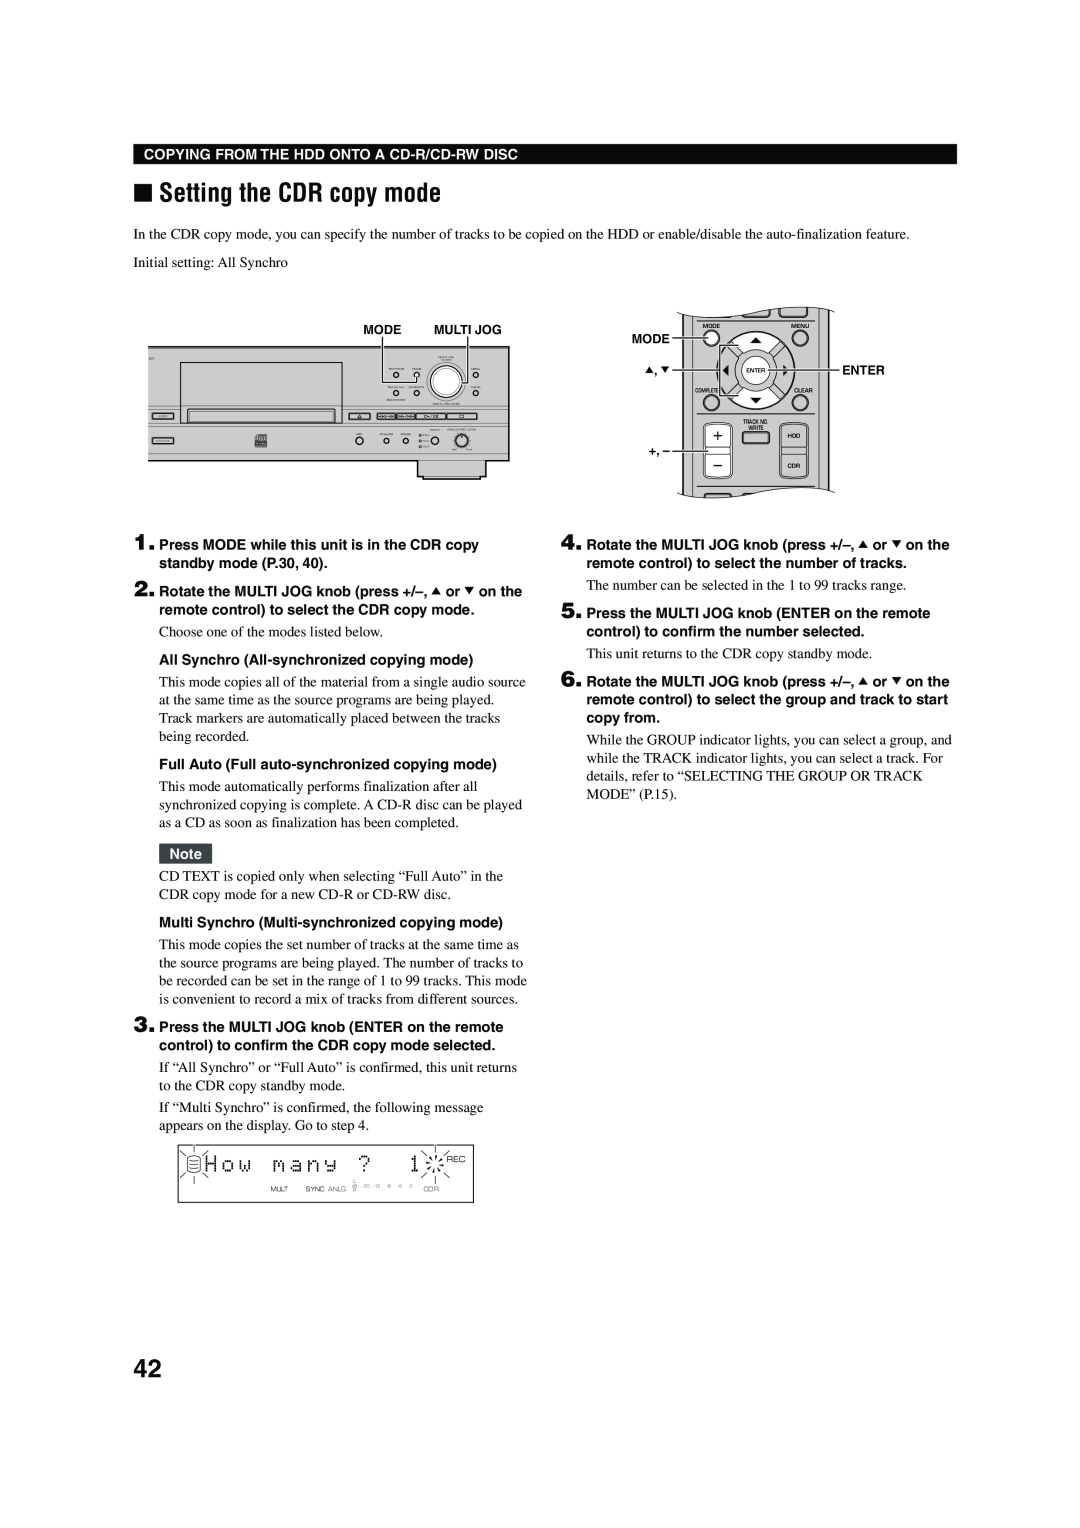 Yamaha CDR-HD 1500 owner manual Setting the CDR copy mode, H o w m a n y ?, Copying From The Hdd Onto A Cd-R/Cd-Rwdisc 